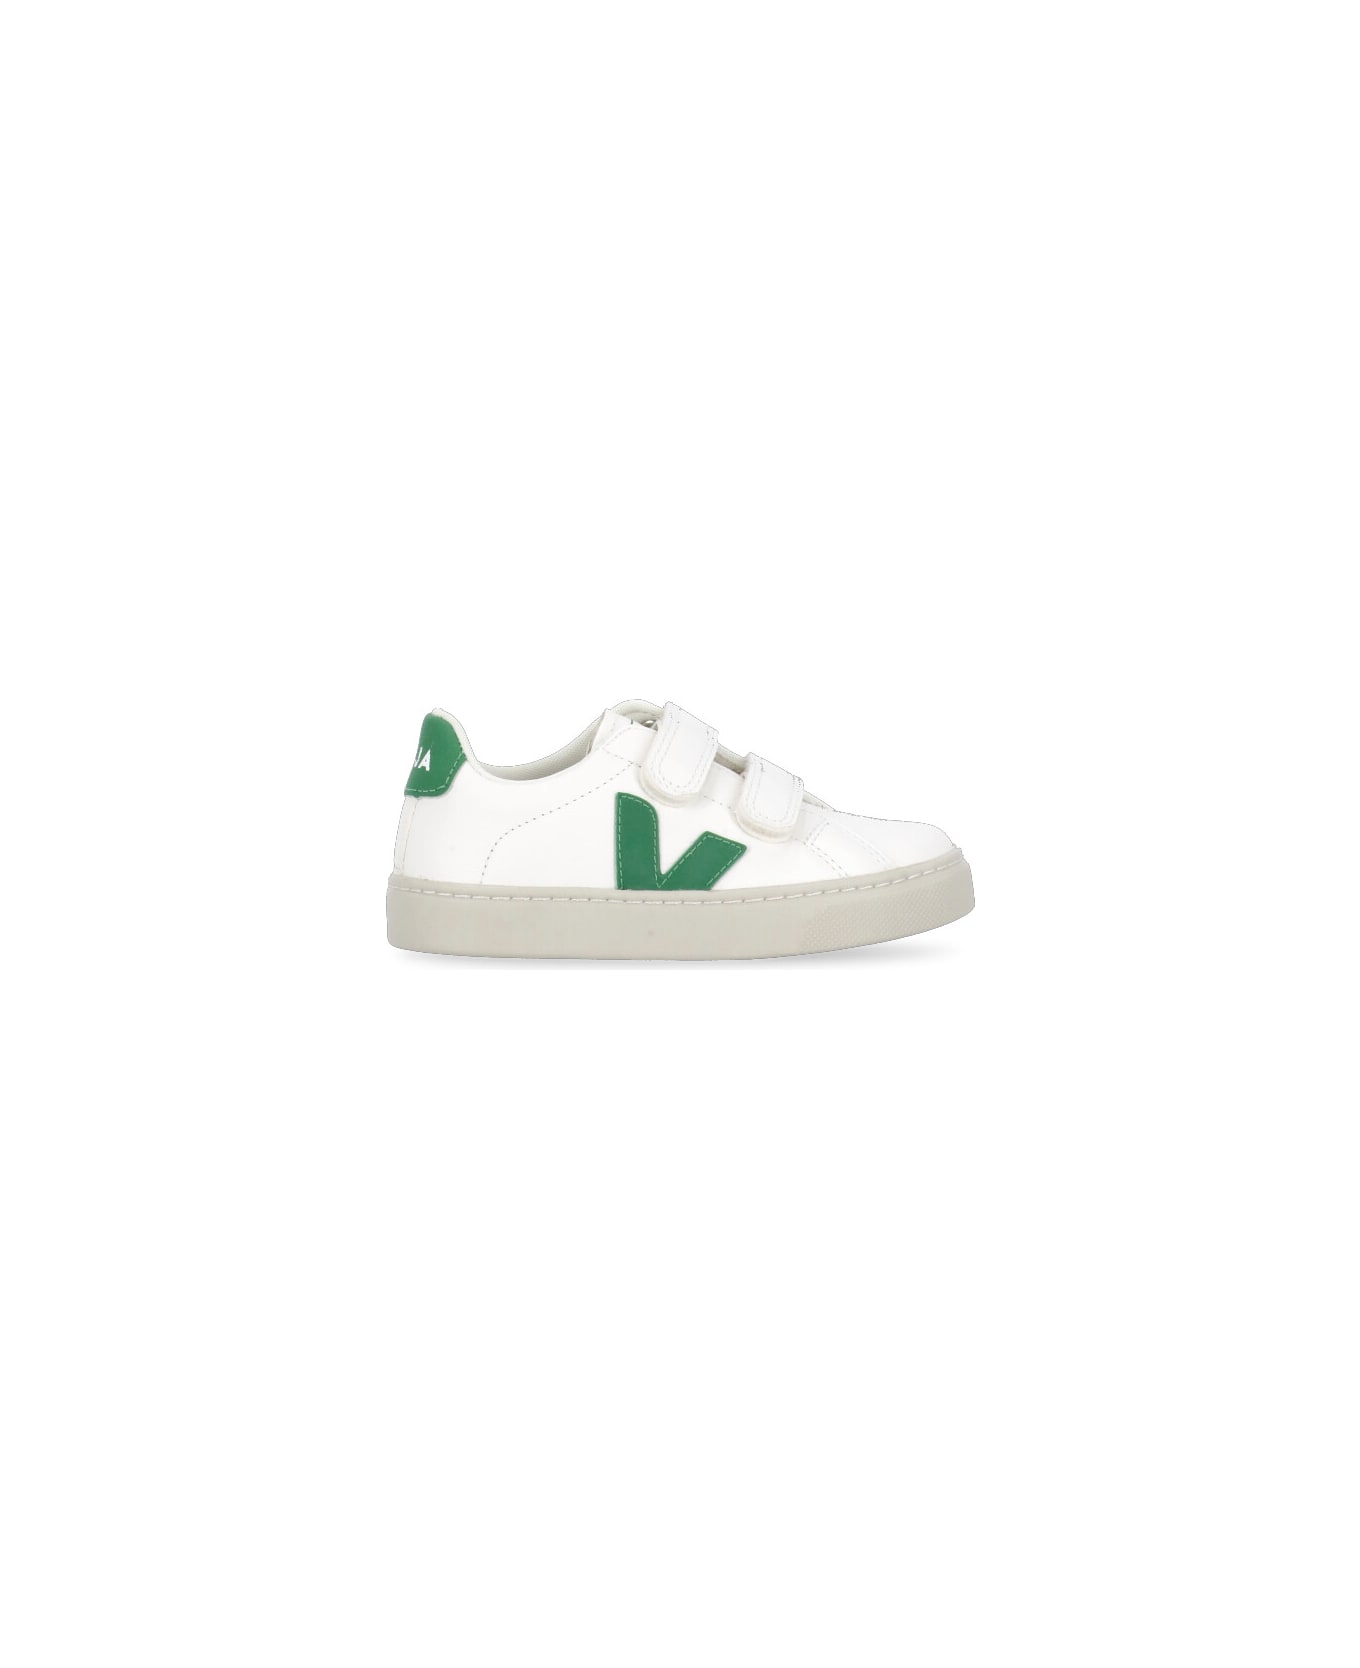 Veja Esplar Sneakers - Green